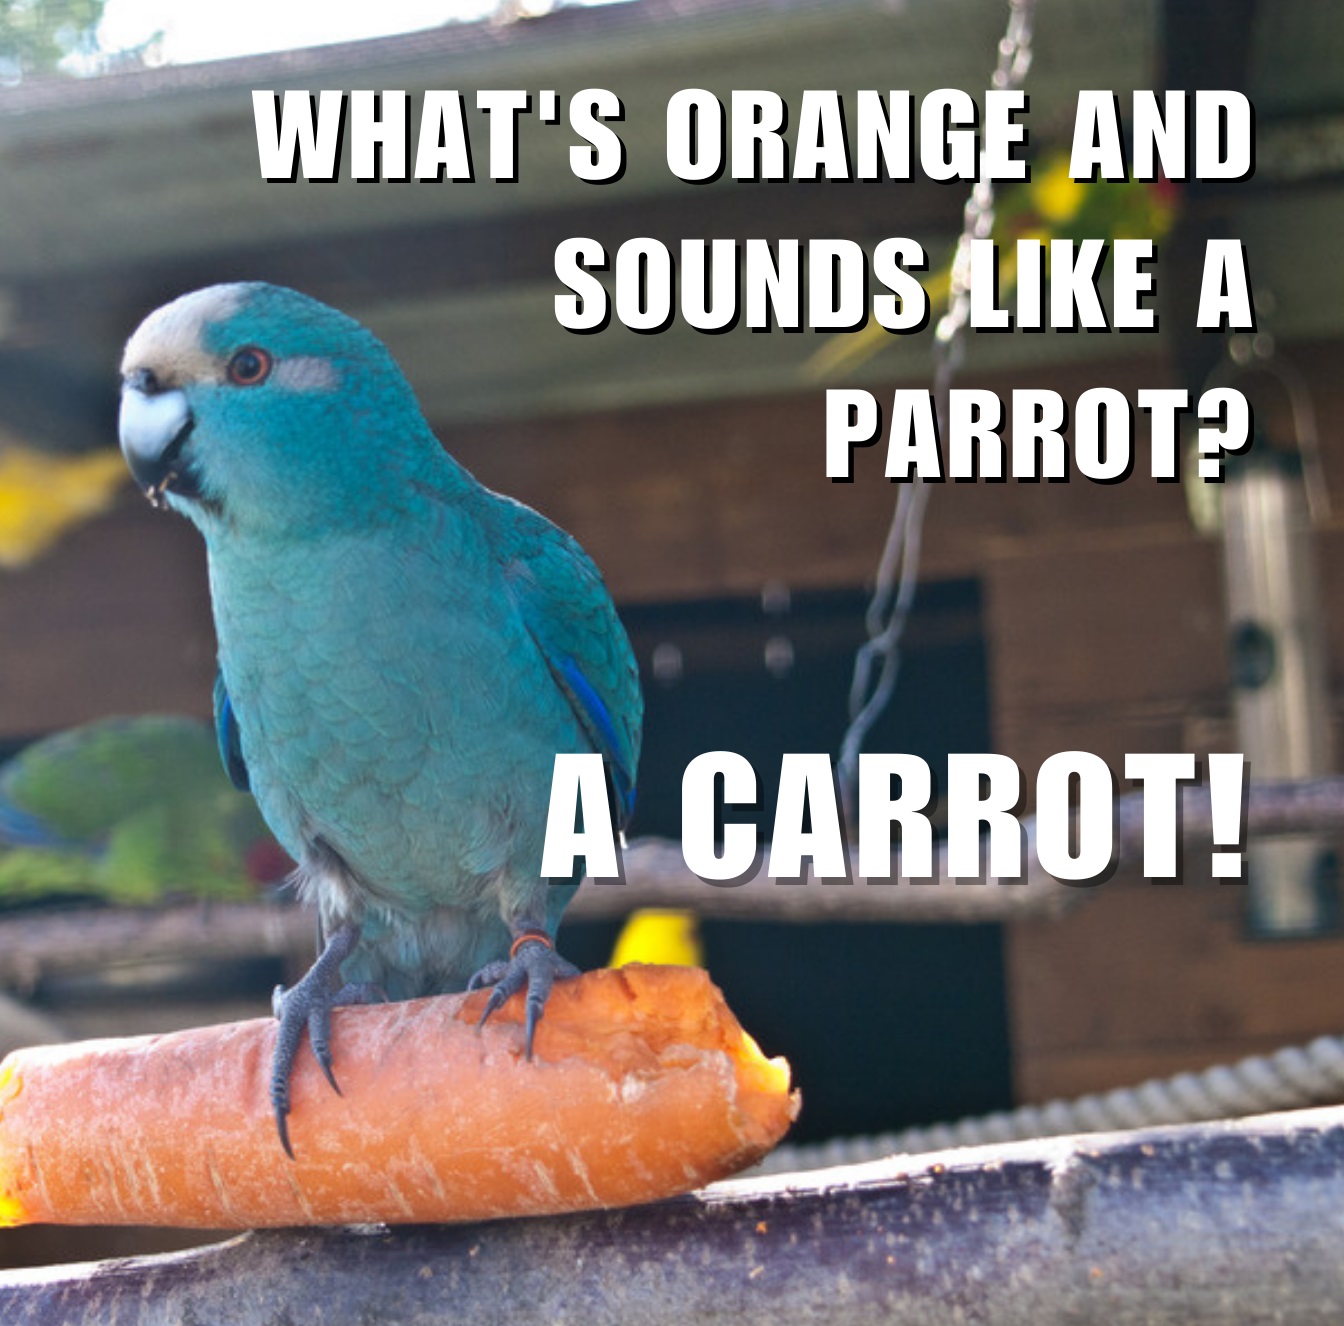 Carrot jokes